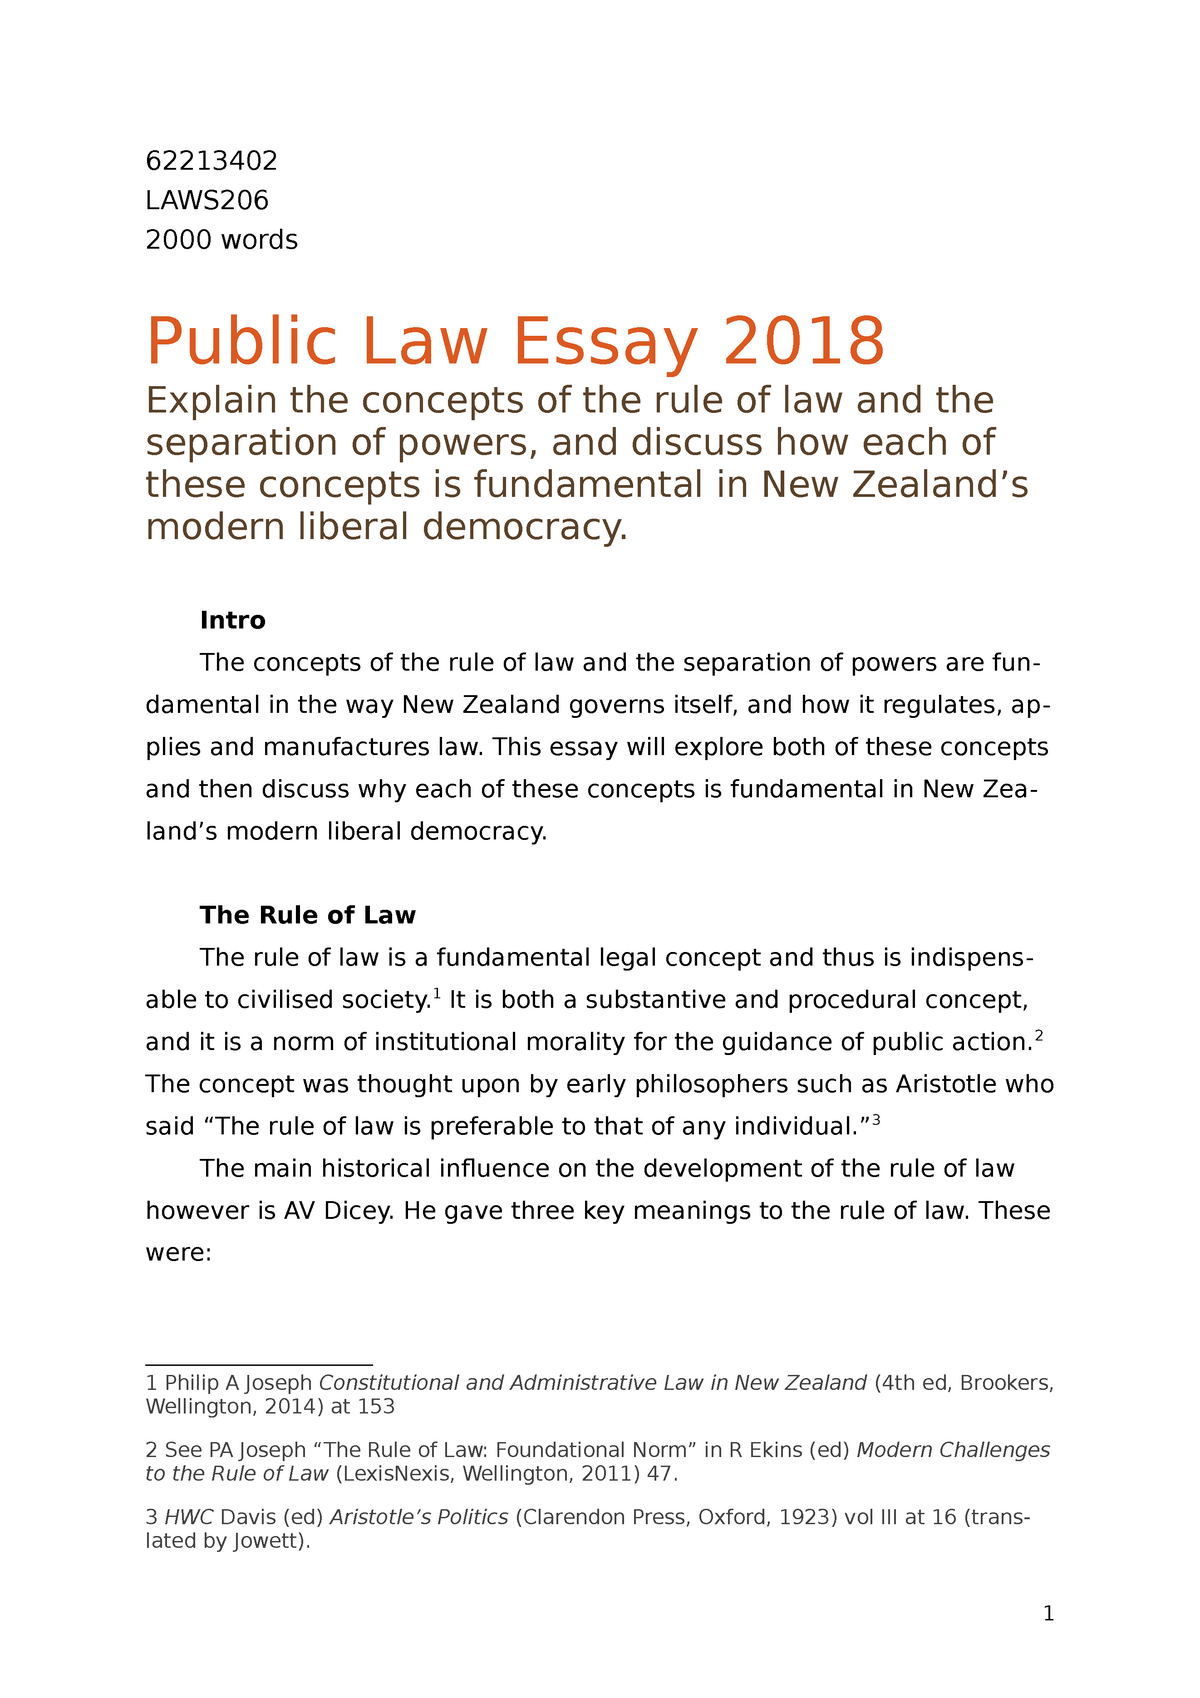 public law thesis topics